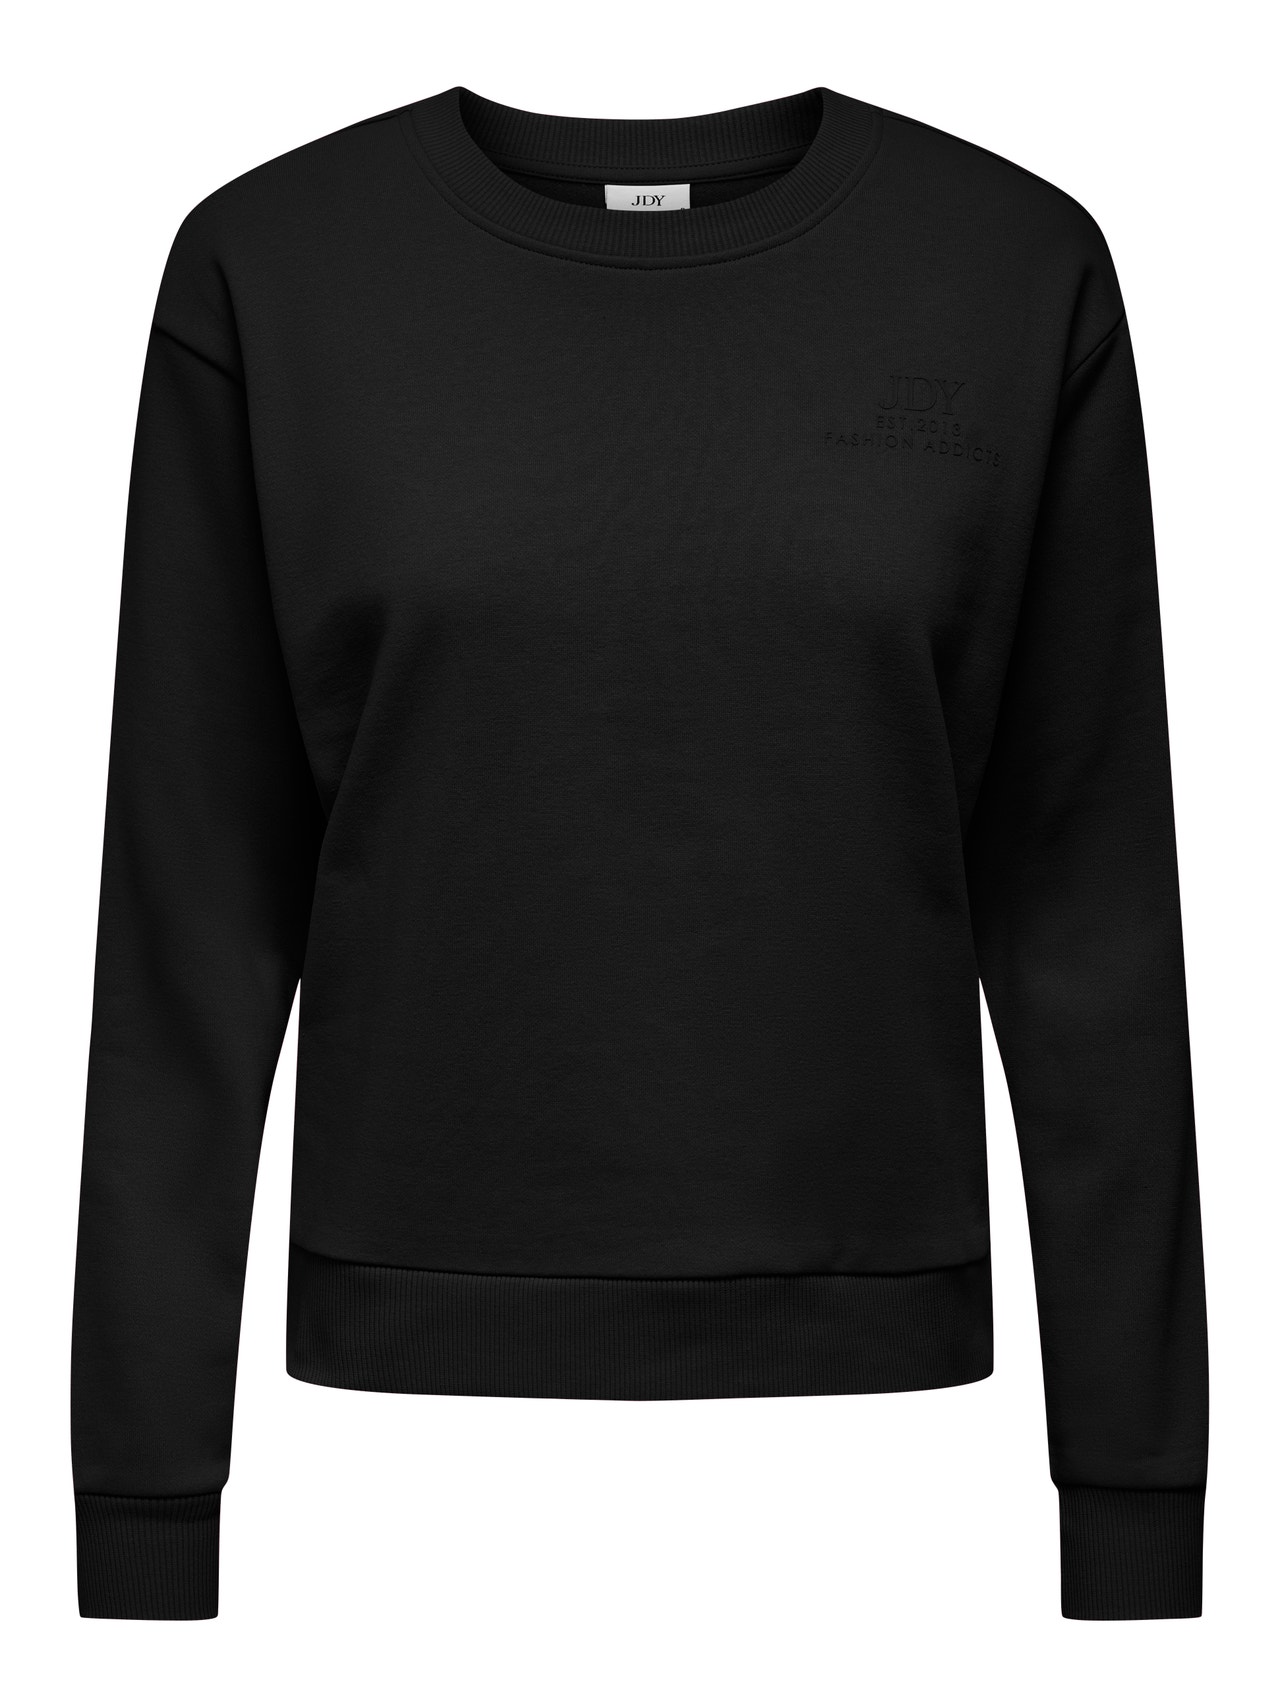 ONLY Sweat-shirt Regular Fit Col rond Poignets côtelés -Black - 15221015